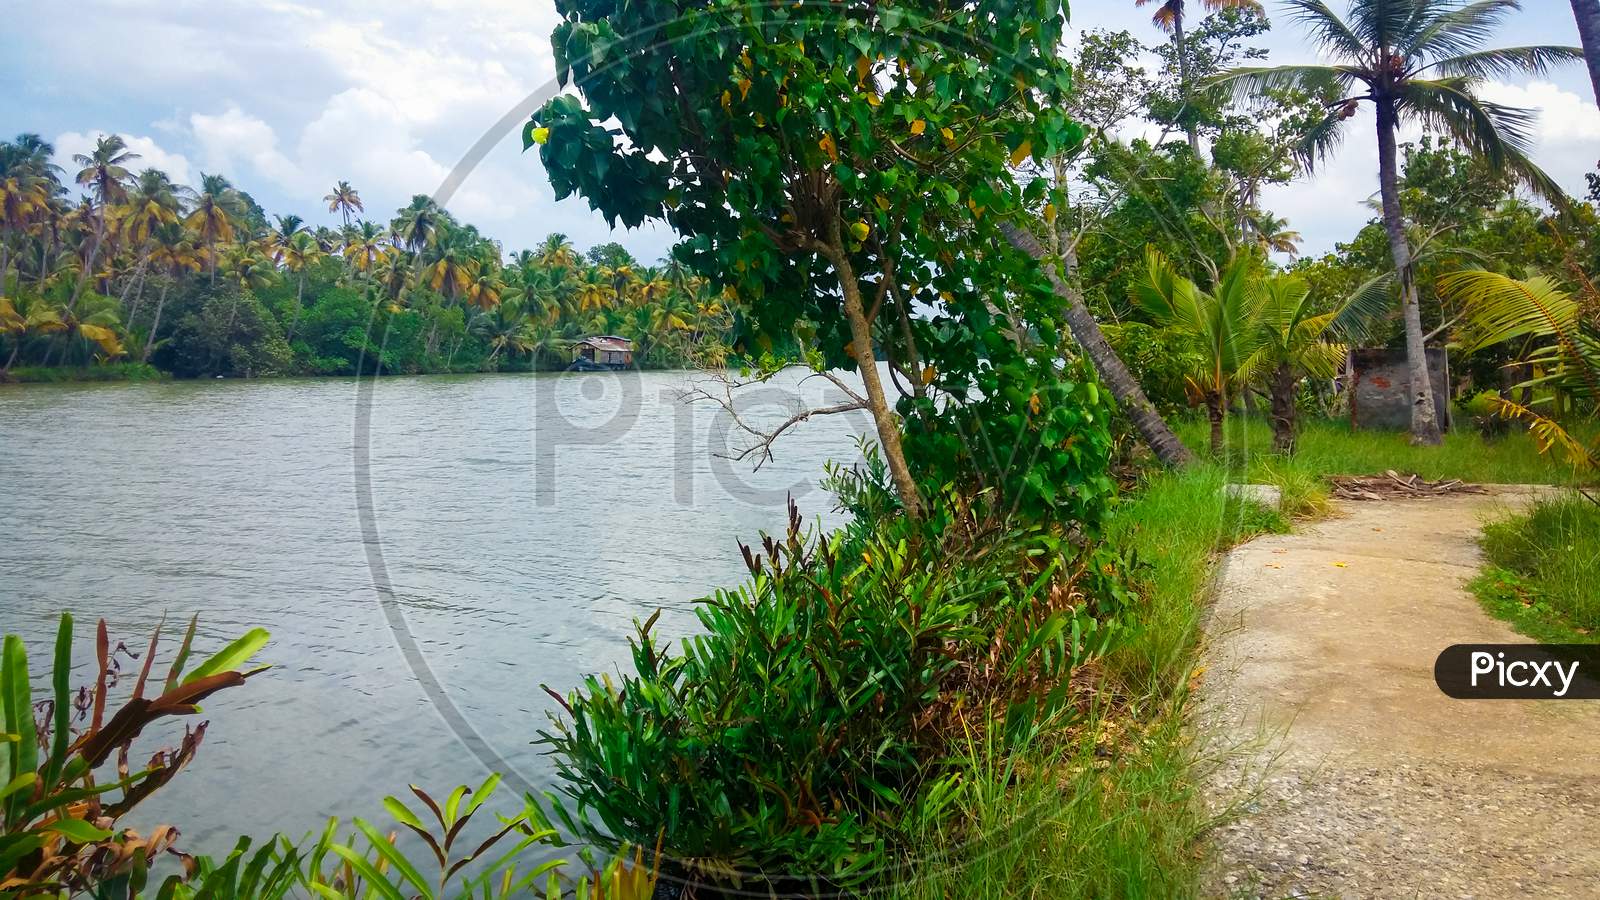 Ashtamudi Lake In Kerala Filled With Green Trees On Shore. Kerala Backwaters.